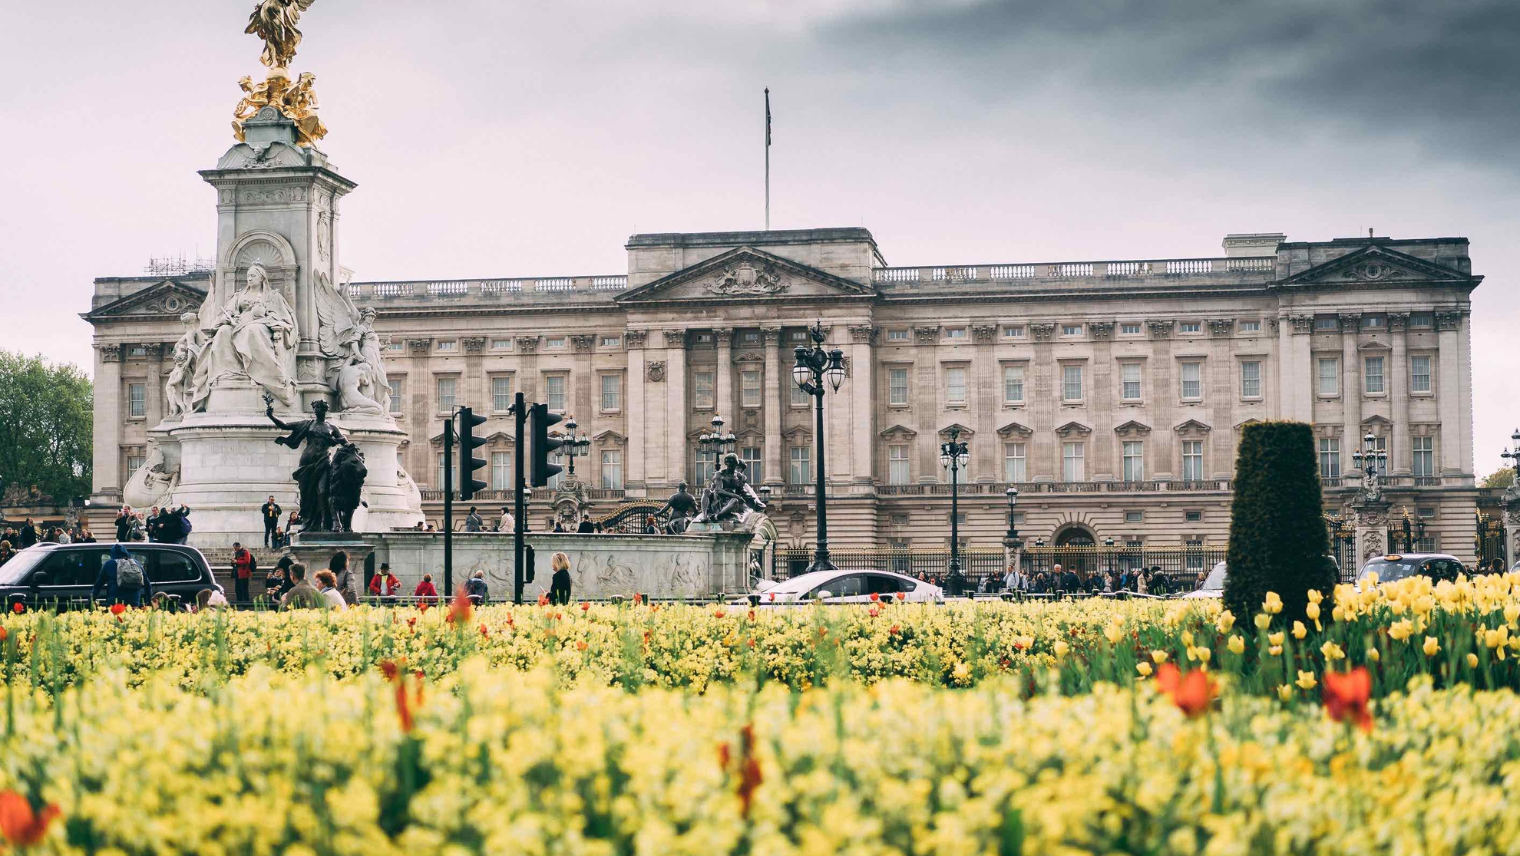 An image of Buckingham Palace